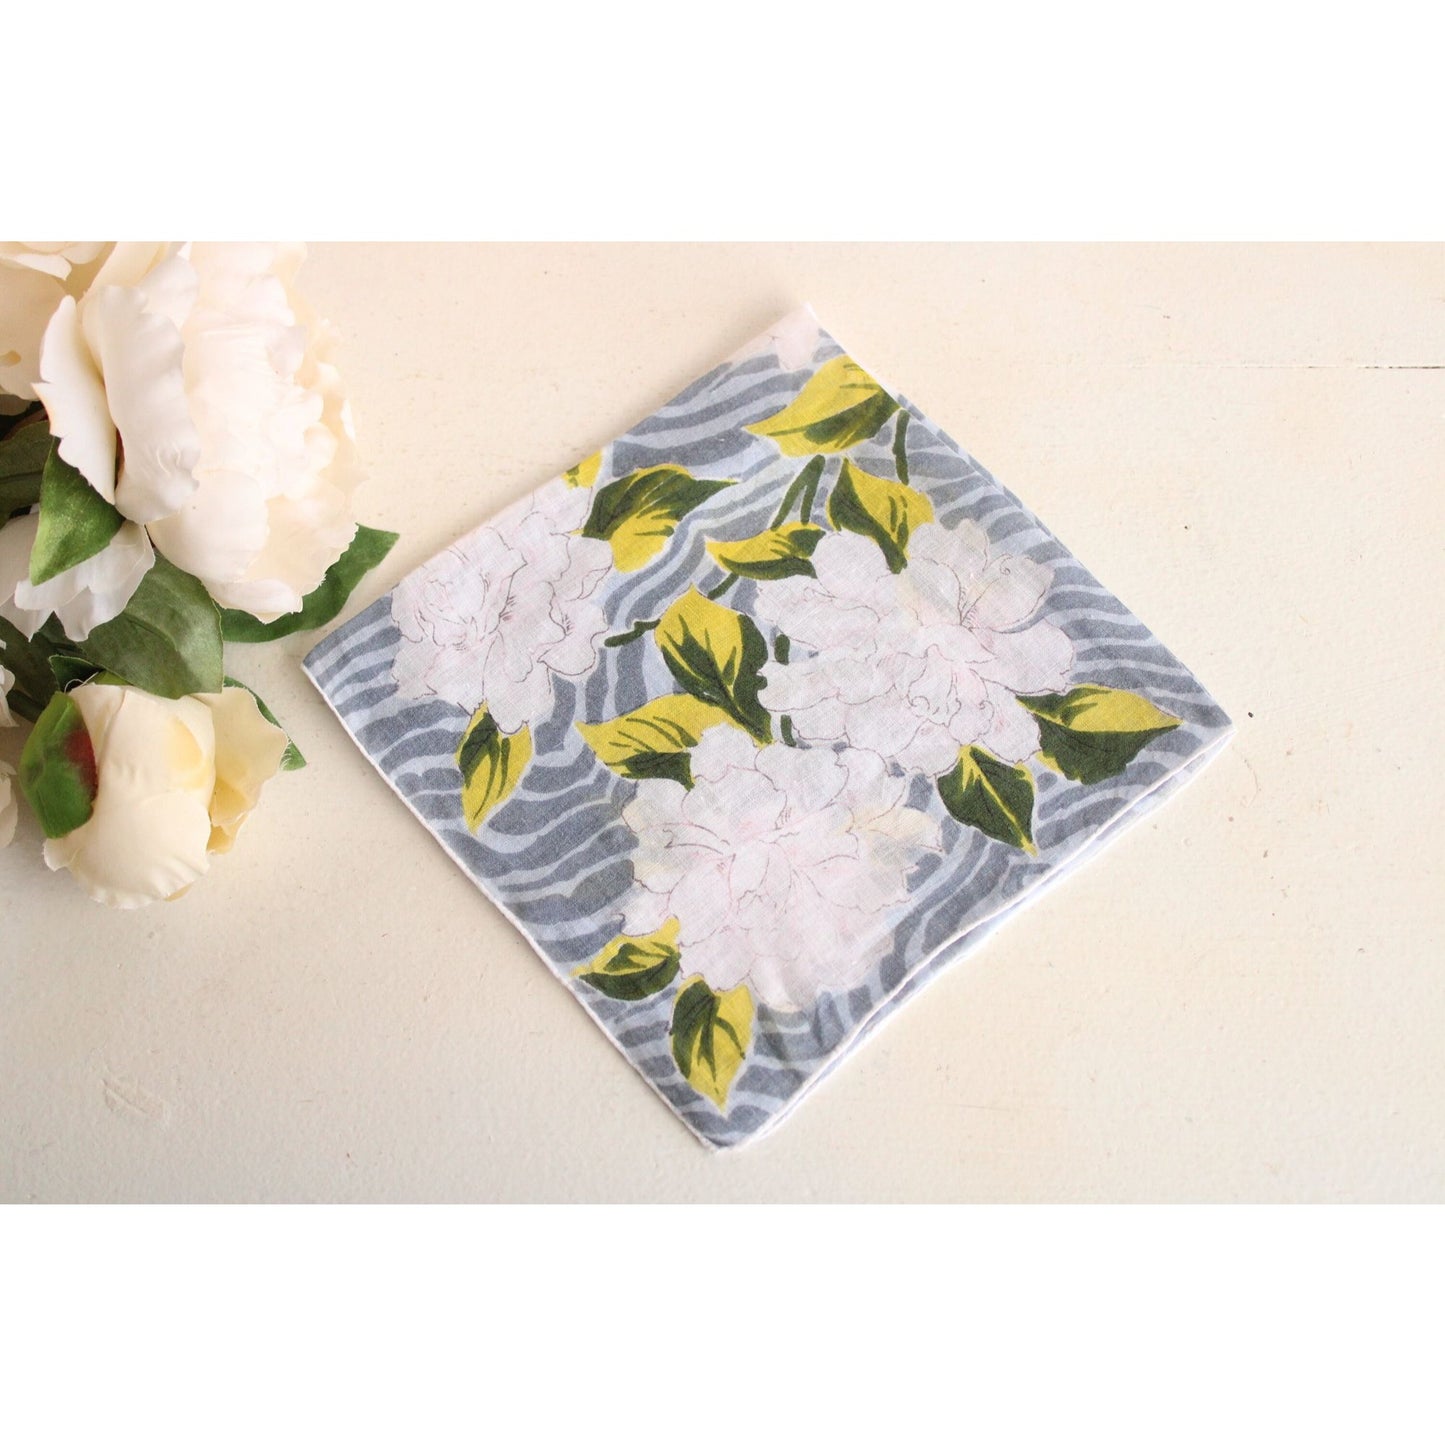 Vintage 1950s 1960s  Zebra Print and White Floral Handkerchief